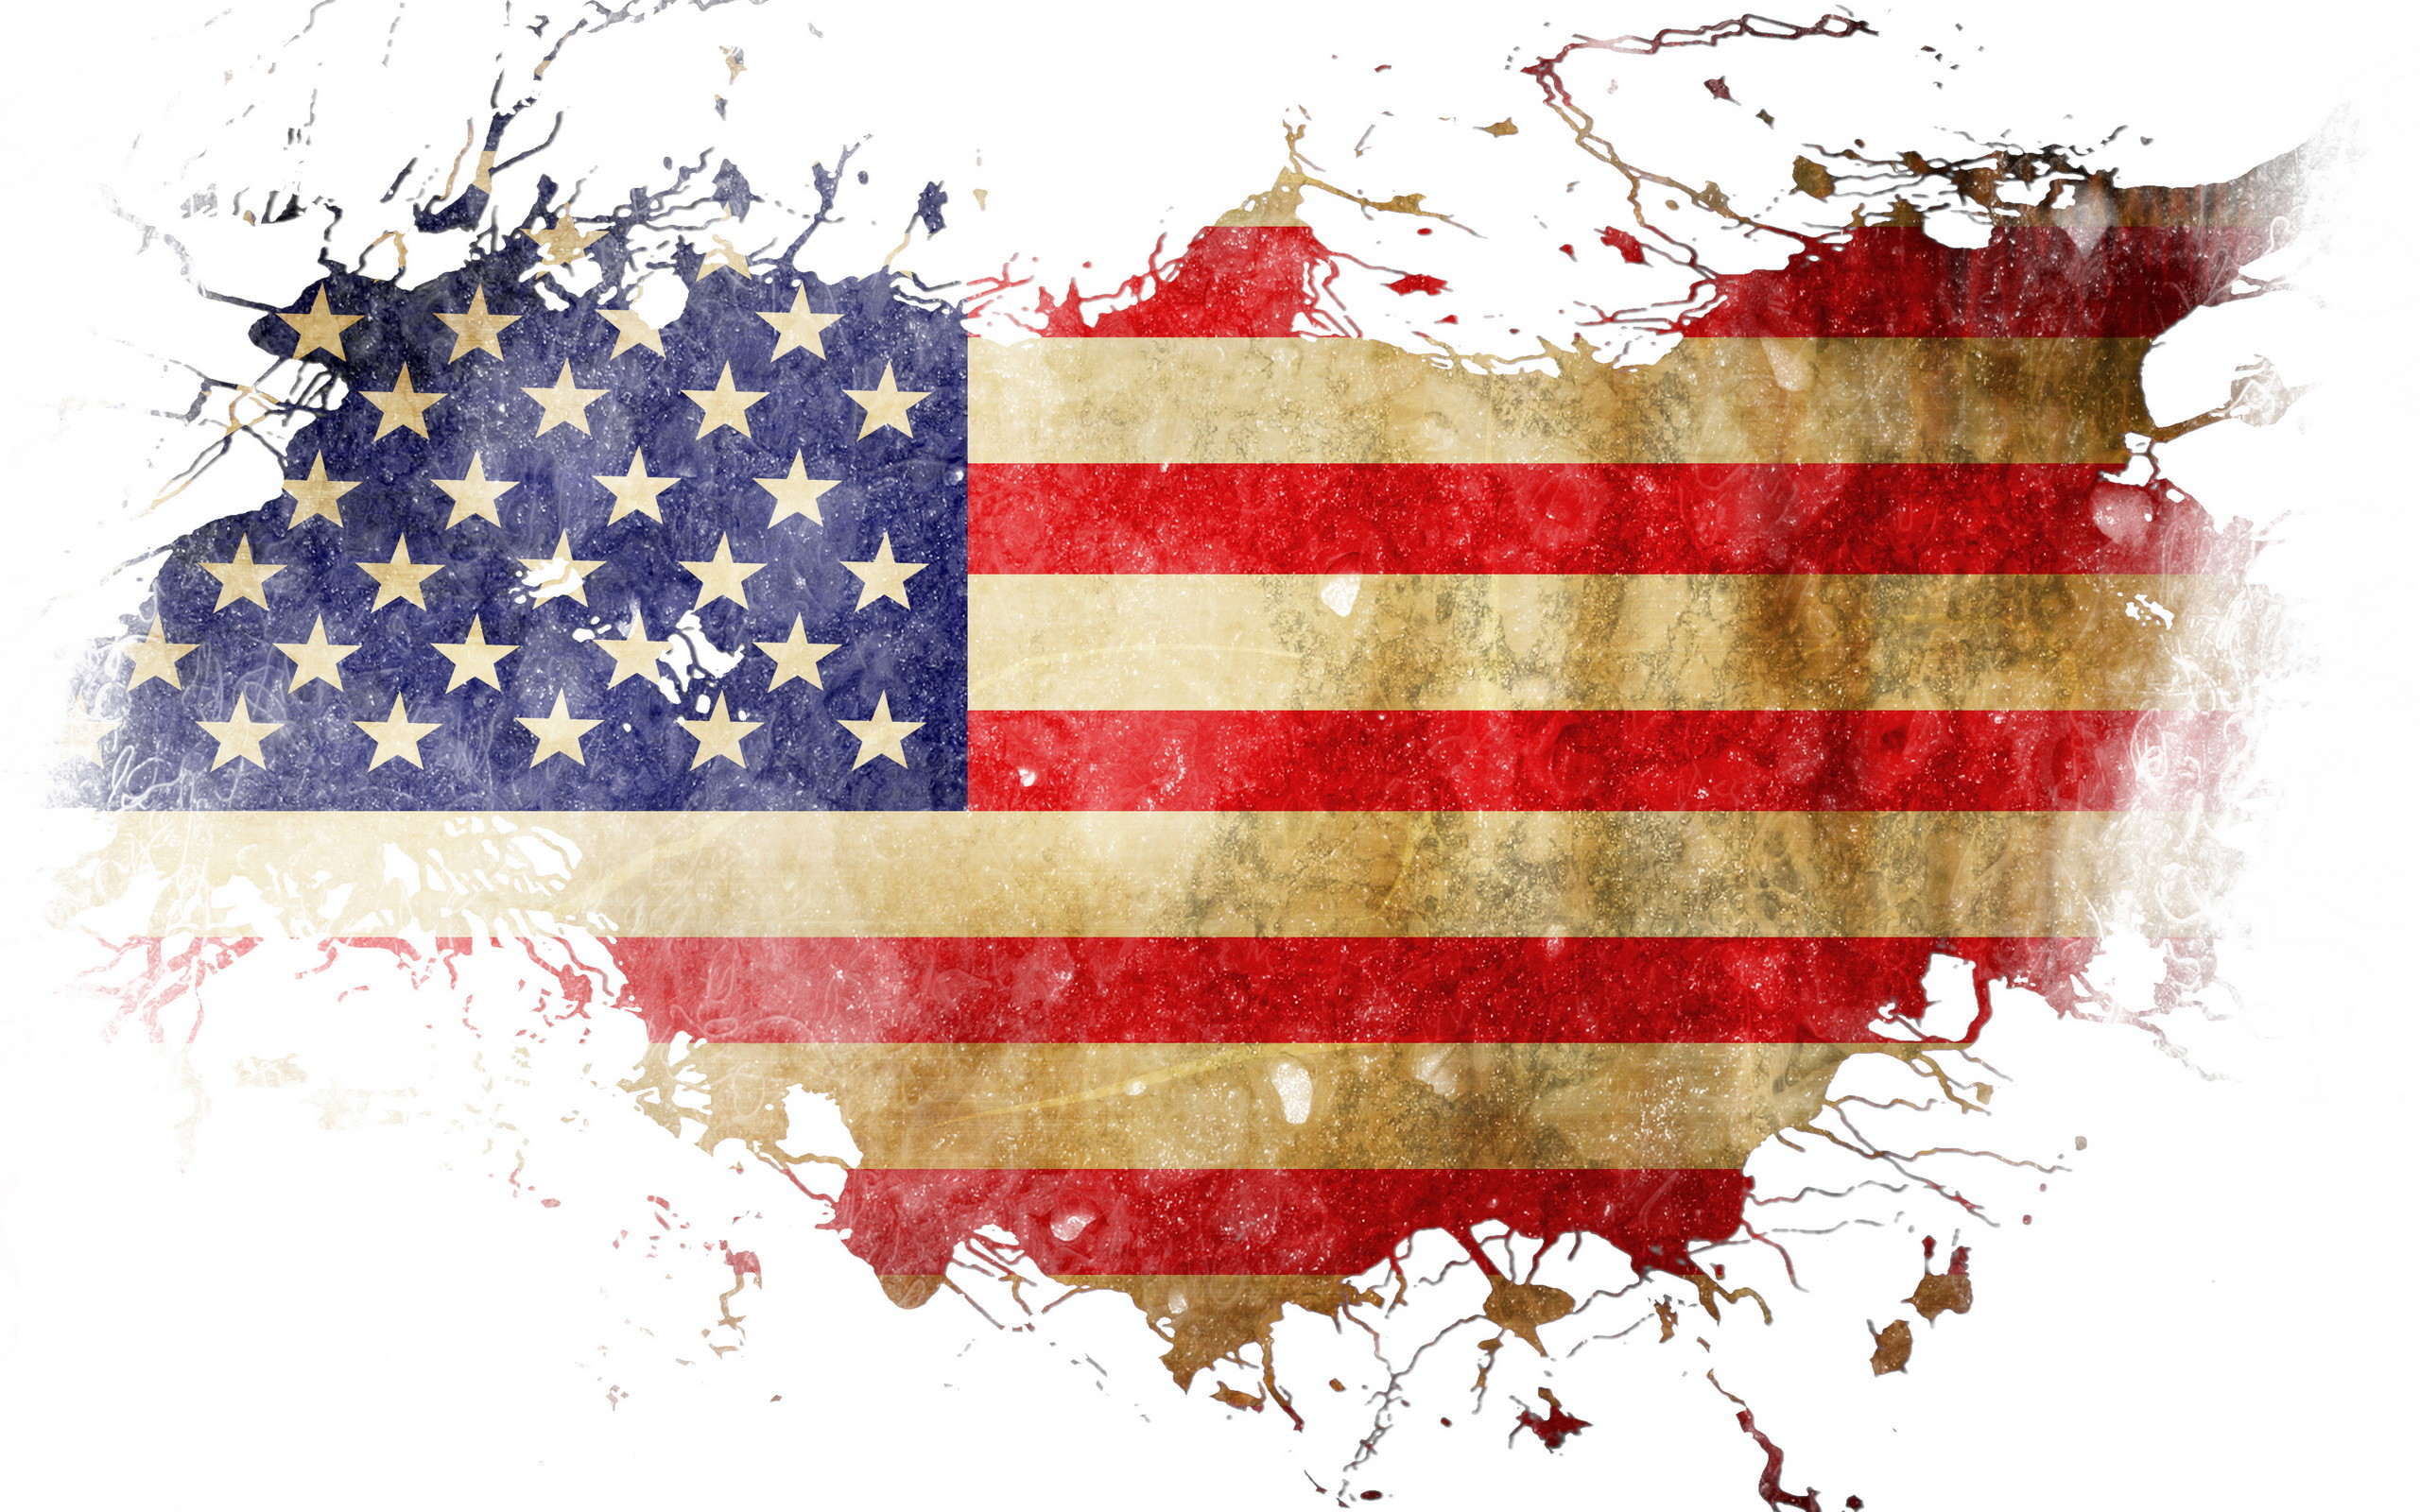 American Flag Background Images 1 Wallpaper Desktop Images Download Hd Free Samsung Iphone Mac 2560 1600 Wallpaper Hd 2560x1600